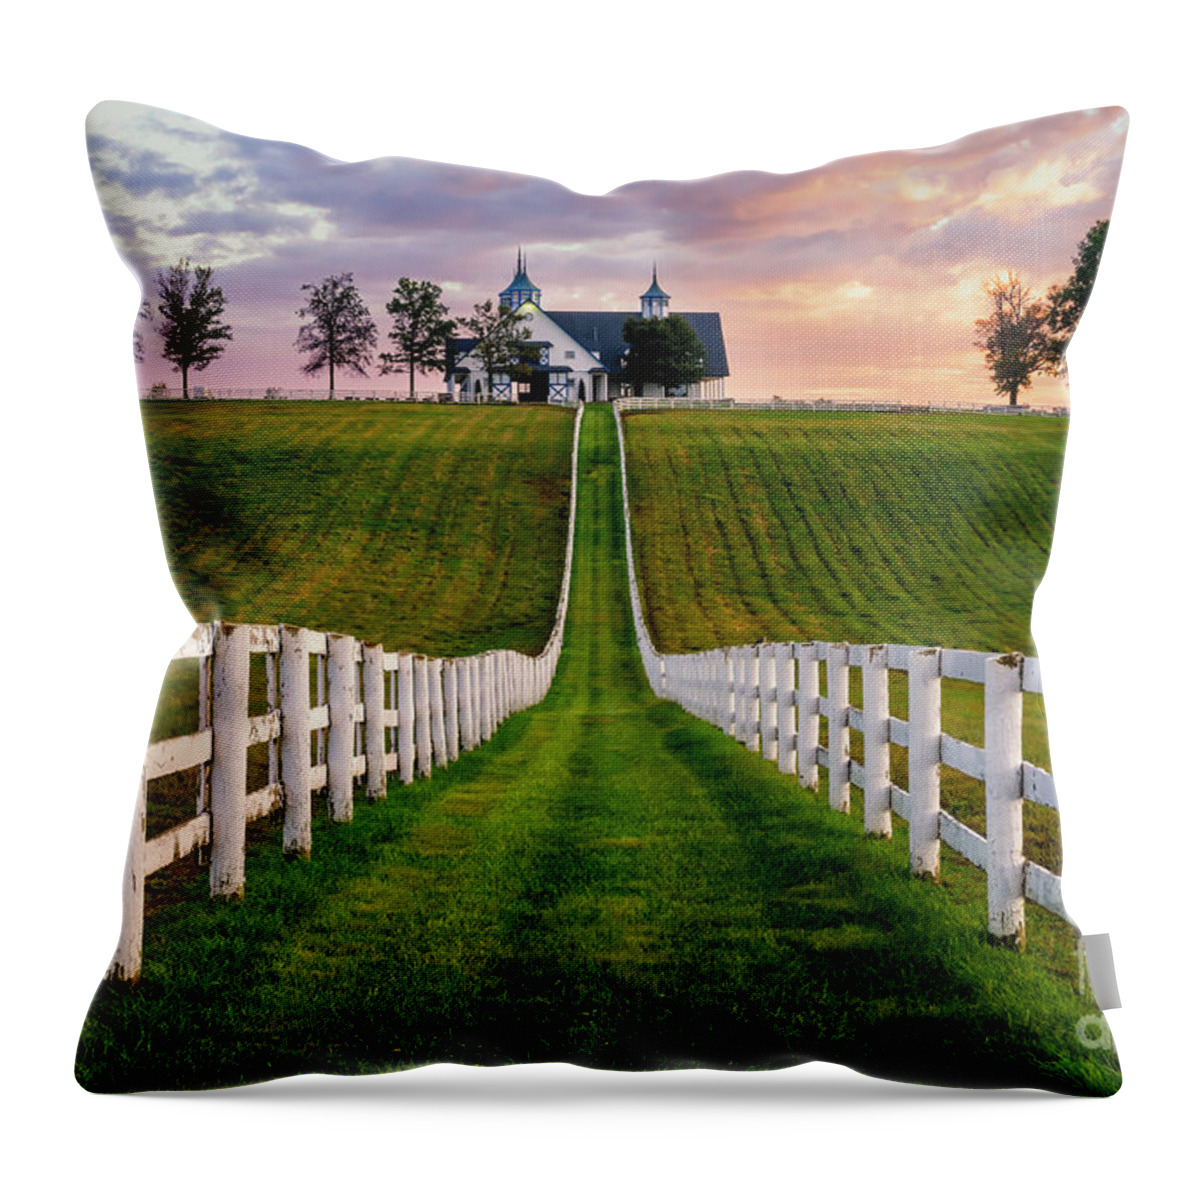 Kentucky Throw Pillow featuring the photograph Bluegrass Farm by Anthony Heflin